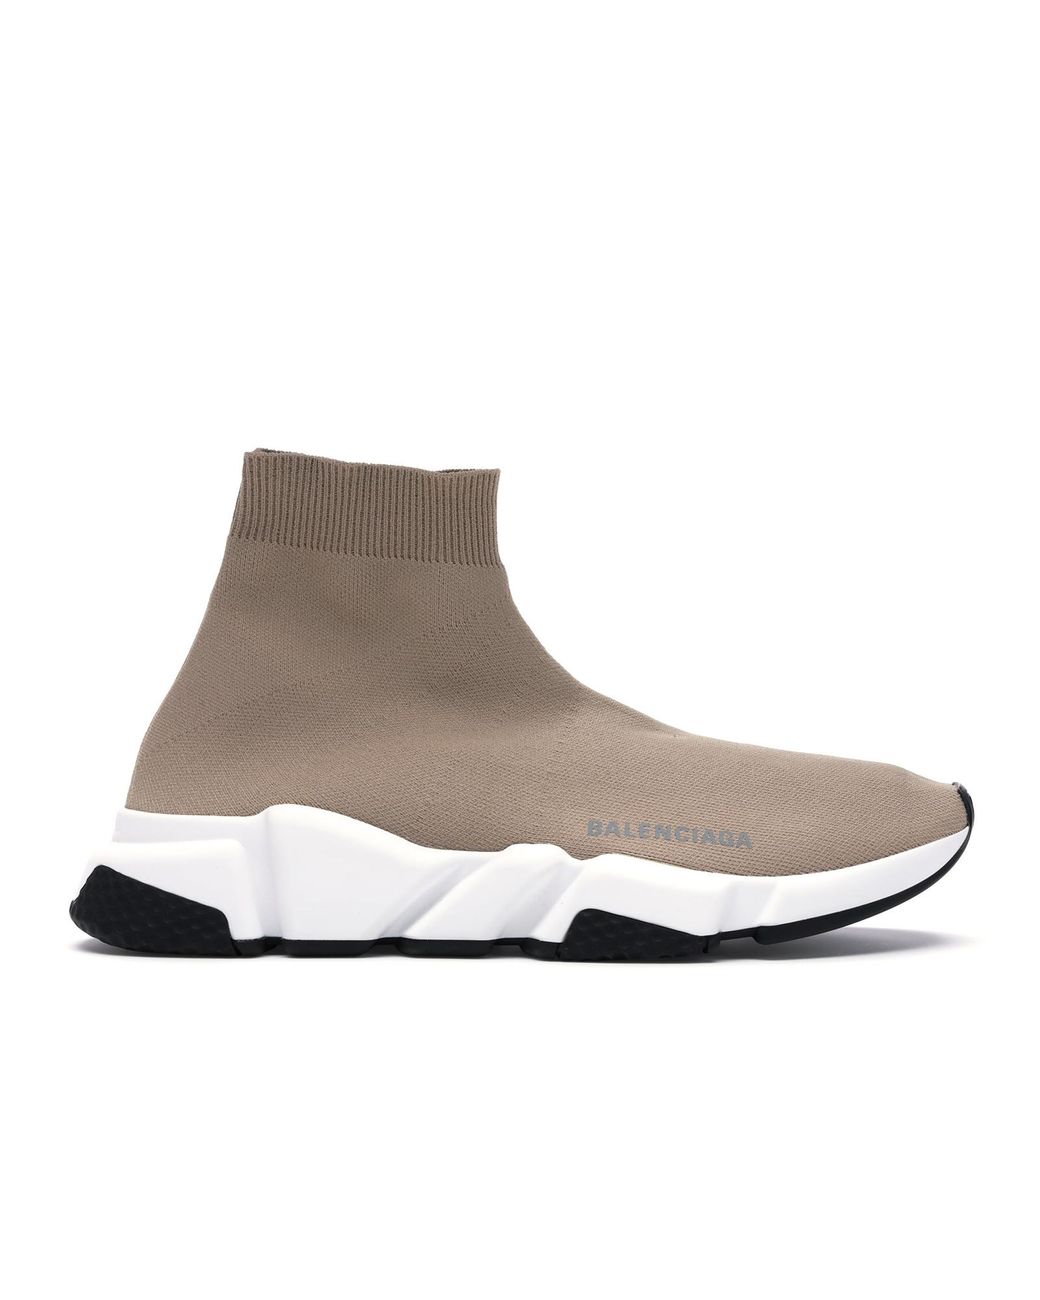 Balenciaga Speed Sneaker in Beige/White (Natural) - Save 42% - Lyst